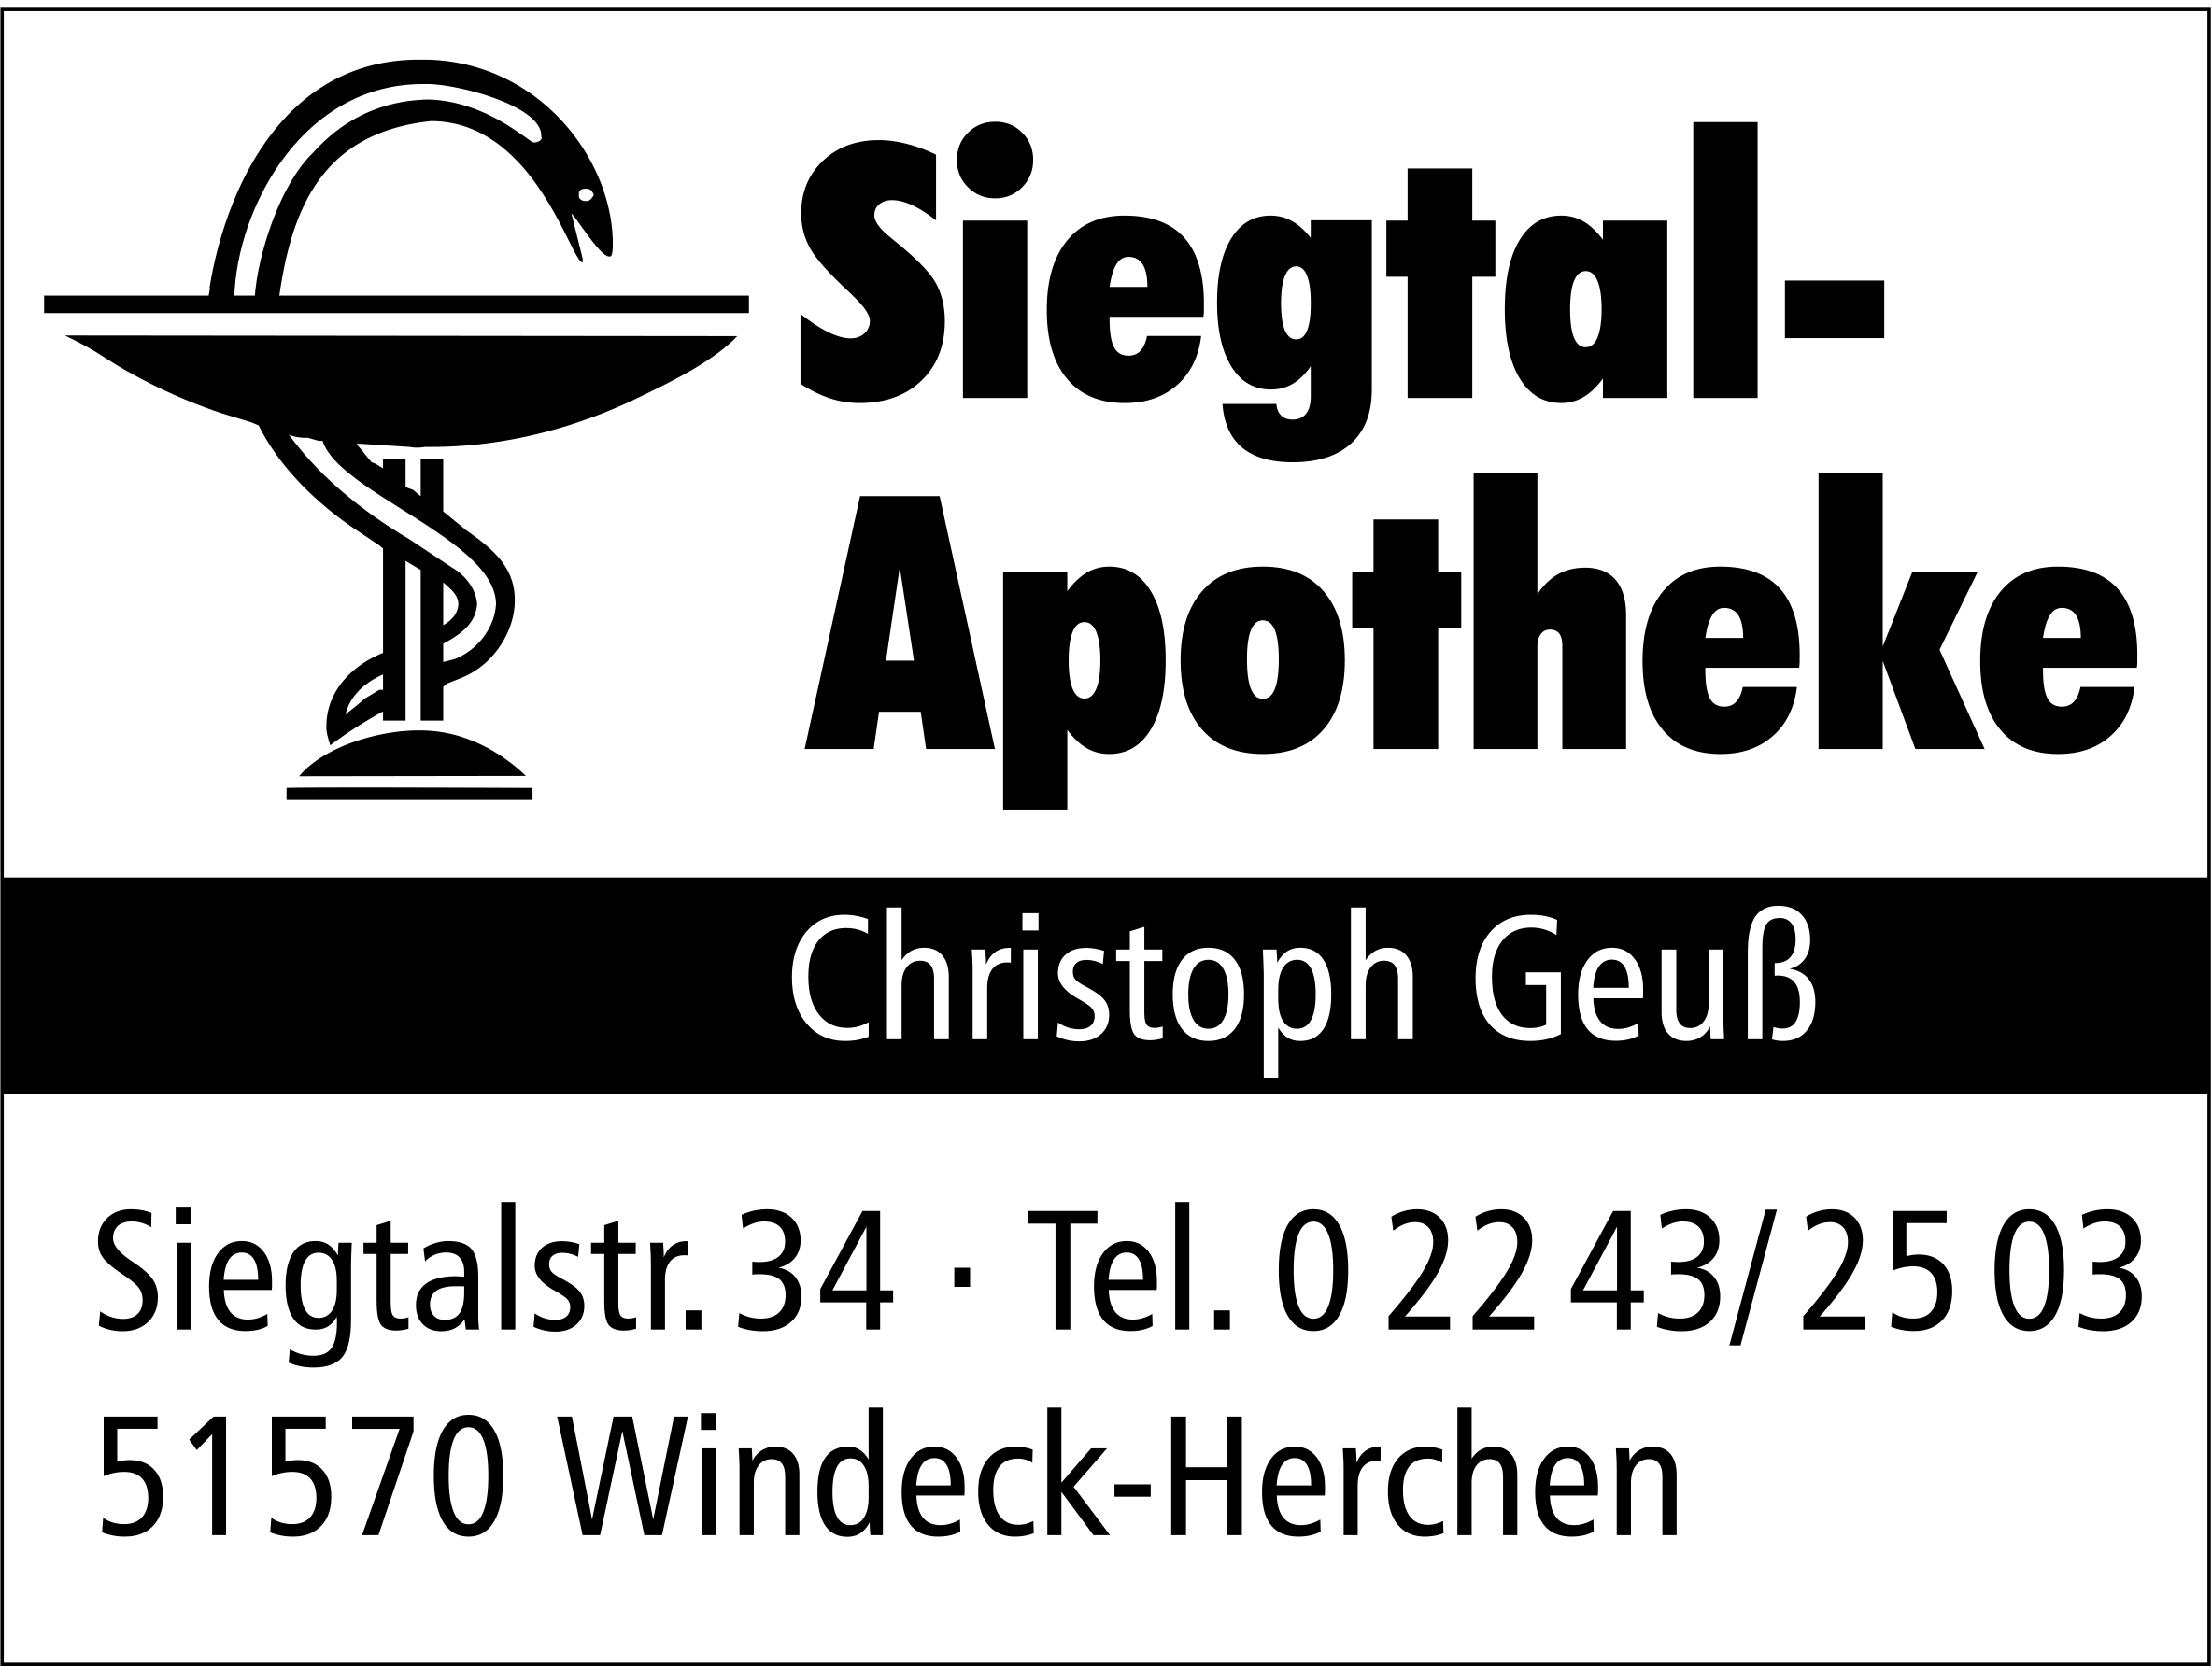 Siegtal-Apotheke in 51570 Windeck